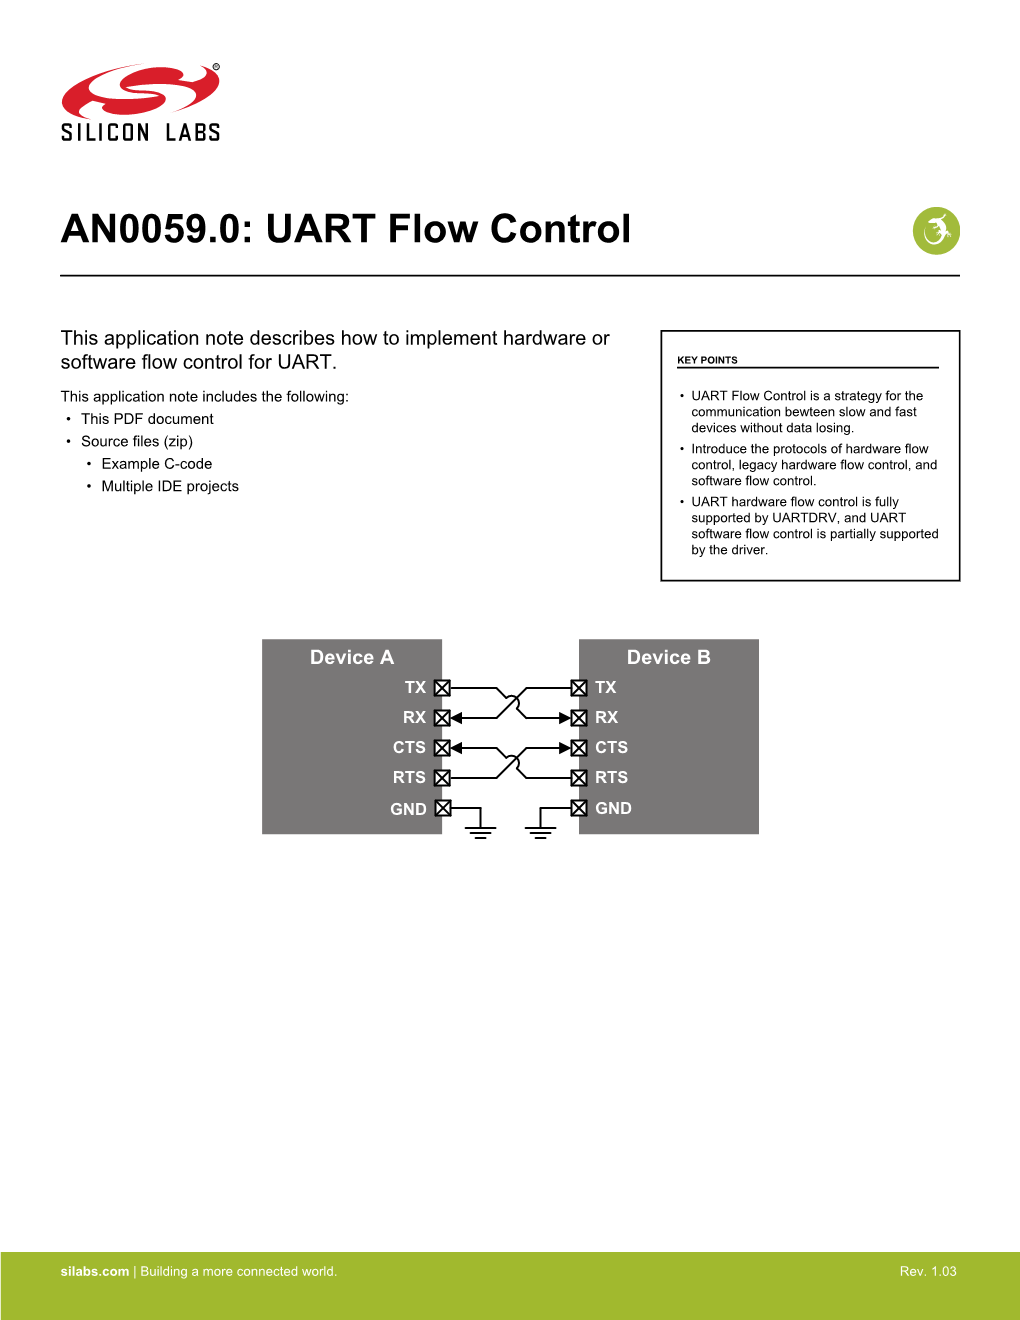 UART Flow Control